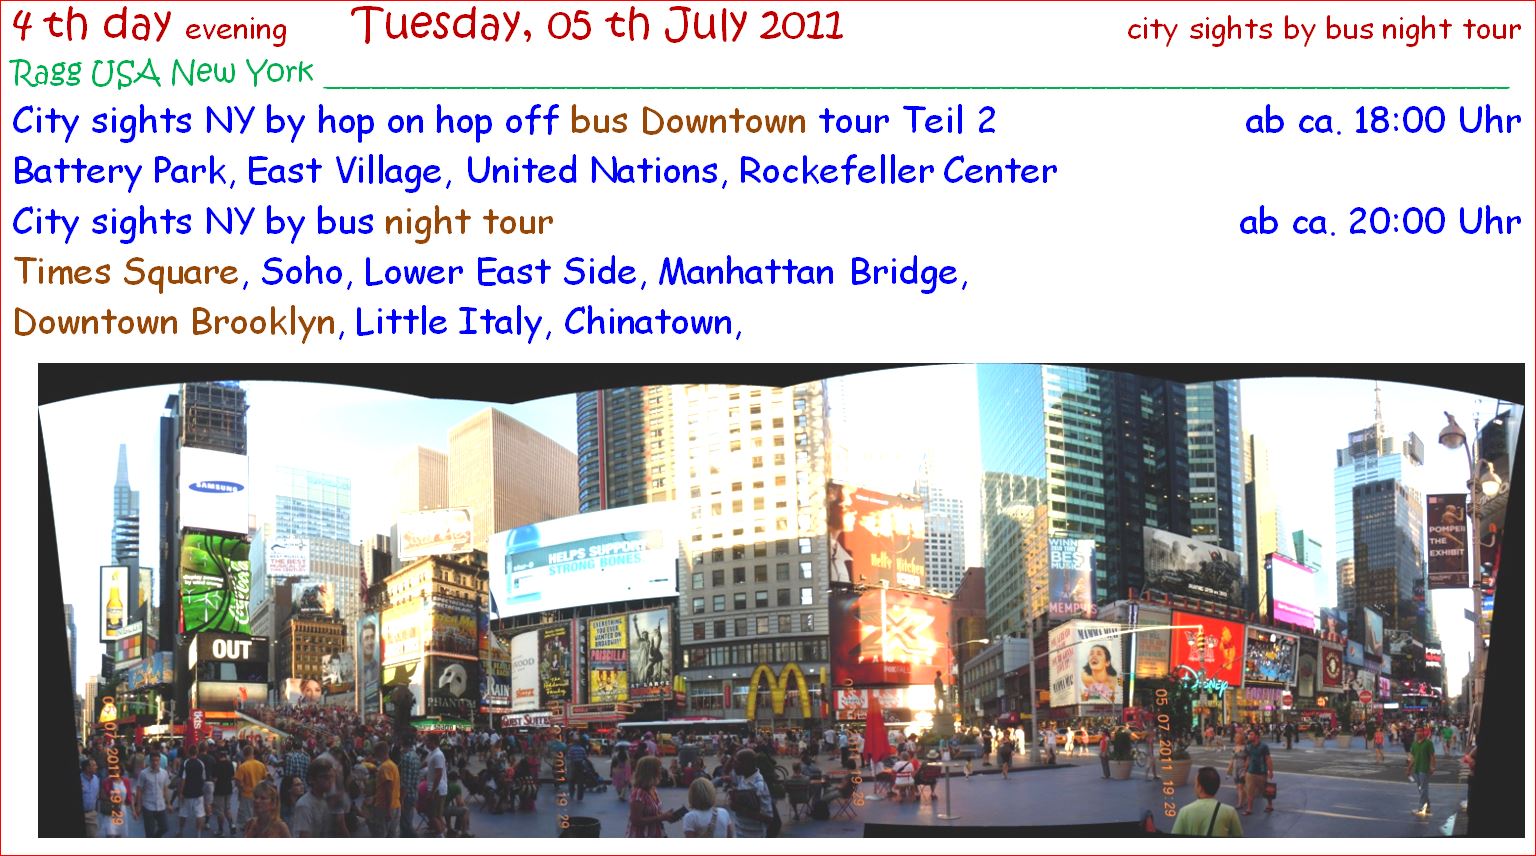 ragg 2011-07-05 - 1140AAweb - USA New York - city bus tour - Tag 04 night - S07 B04